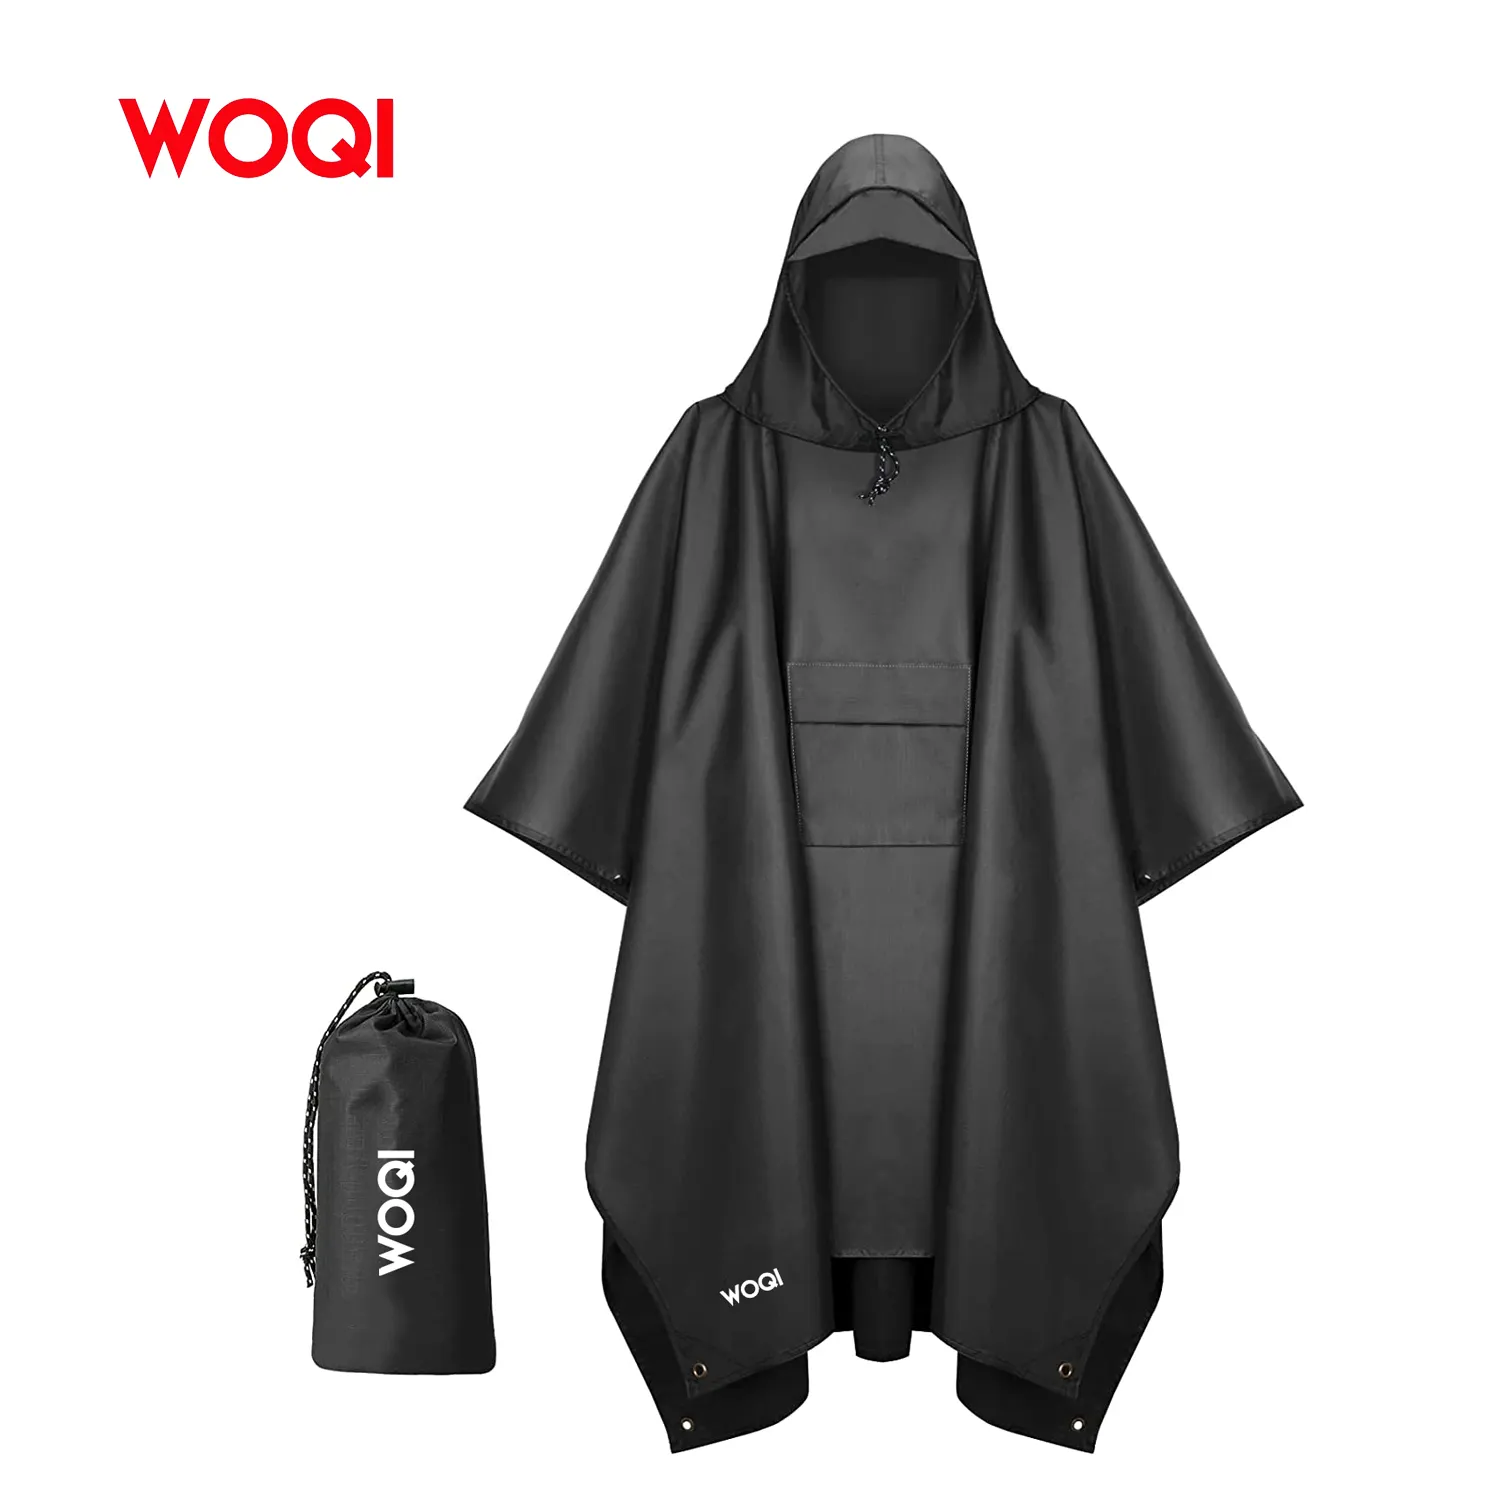 Woqi-Poncho de lluvia con capucha para adultos, impermeable, reutilizable, para hombre y mujer, equipo de lluvia multifuncional ligero